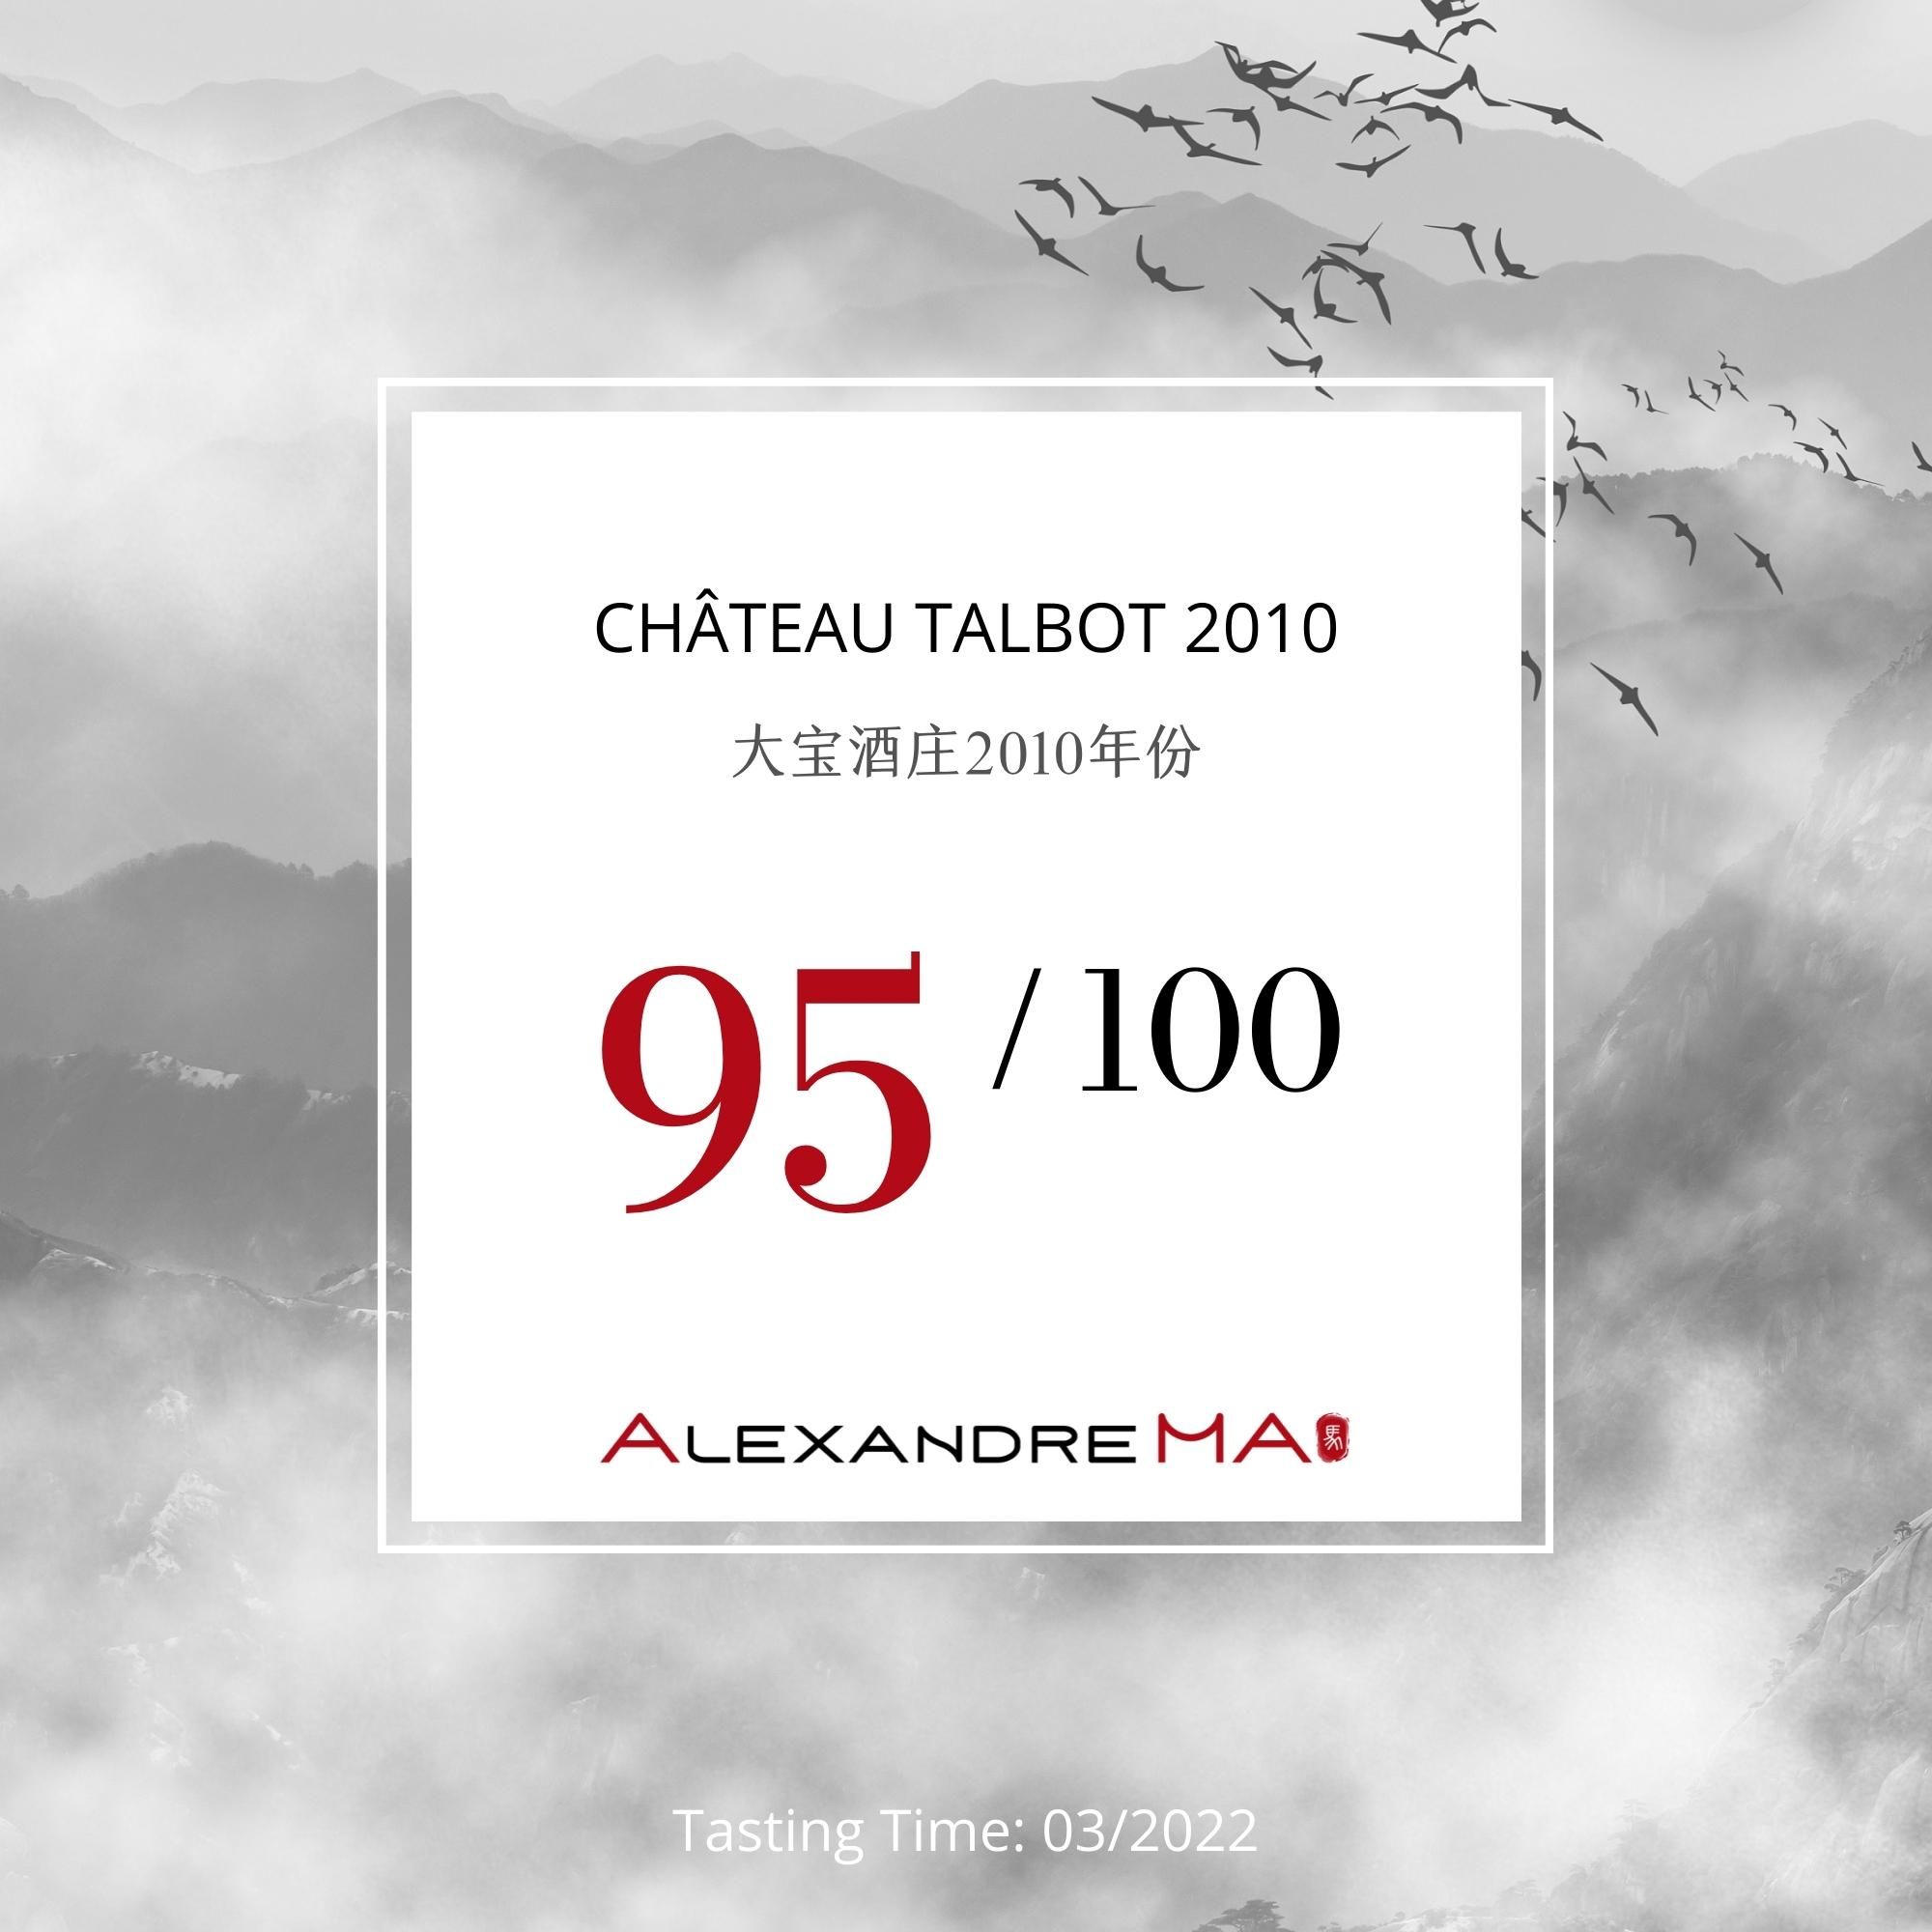 Château Talbot 2010 - Alexandre MA